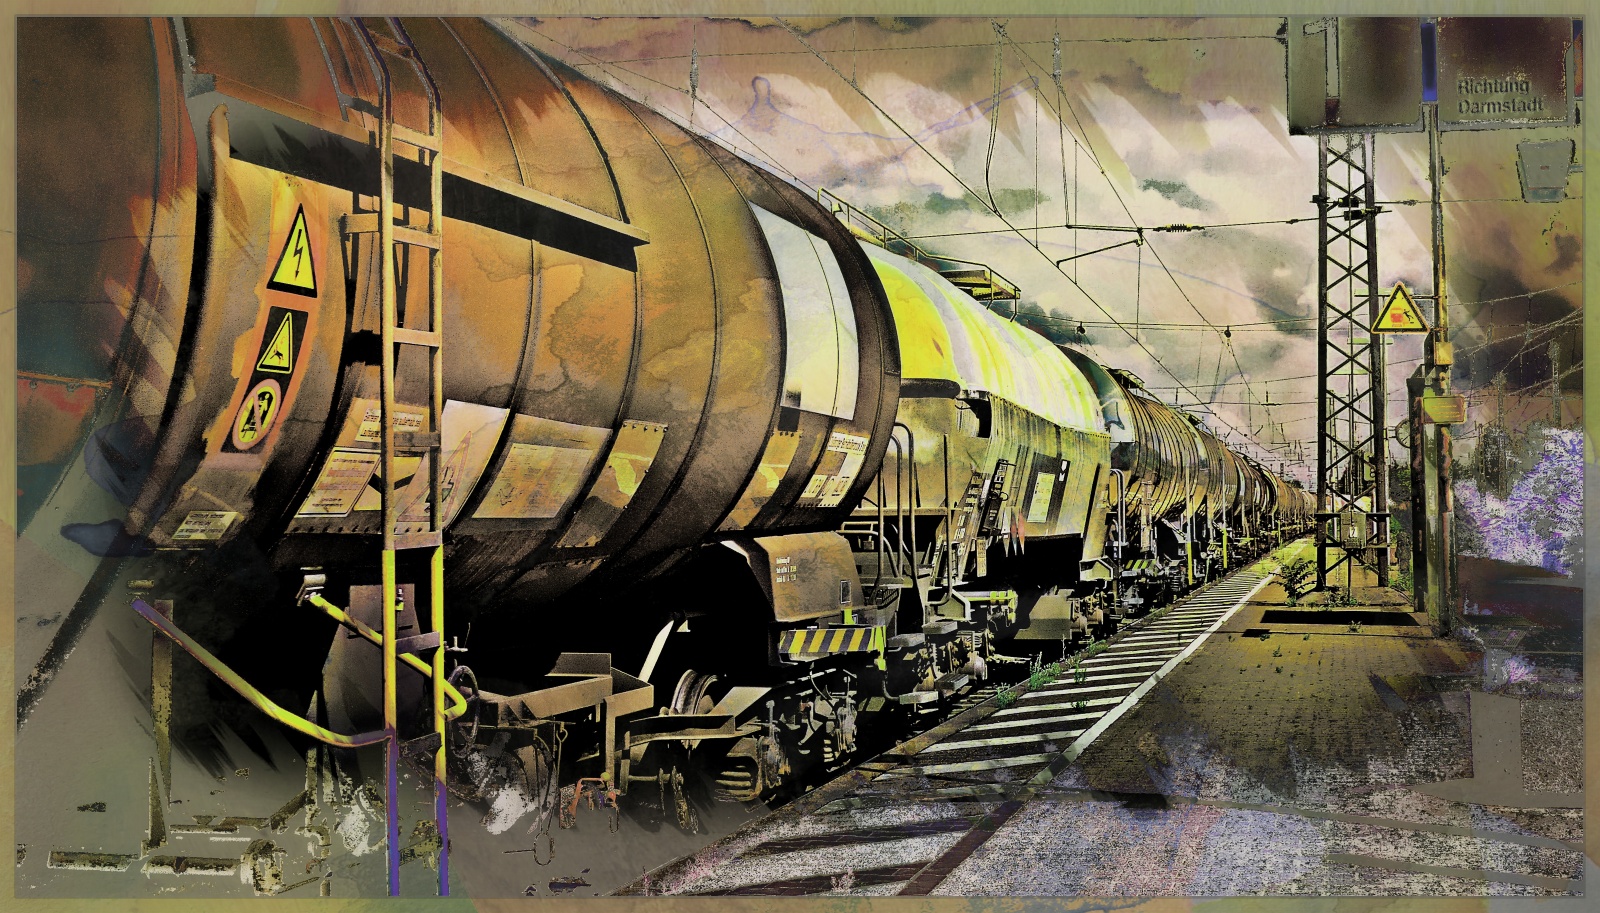 freight train